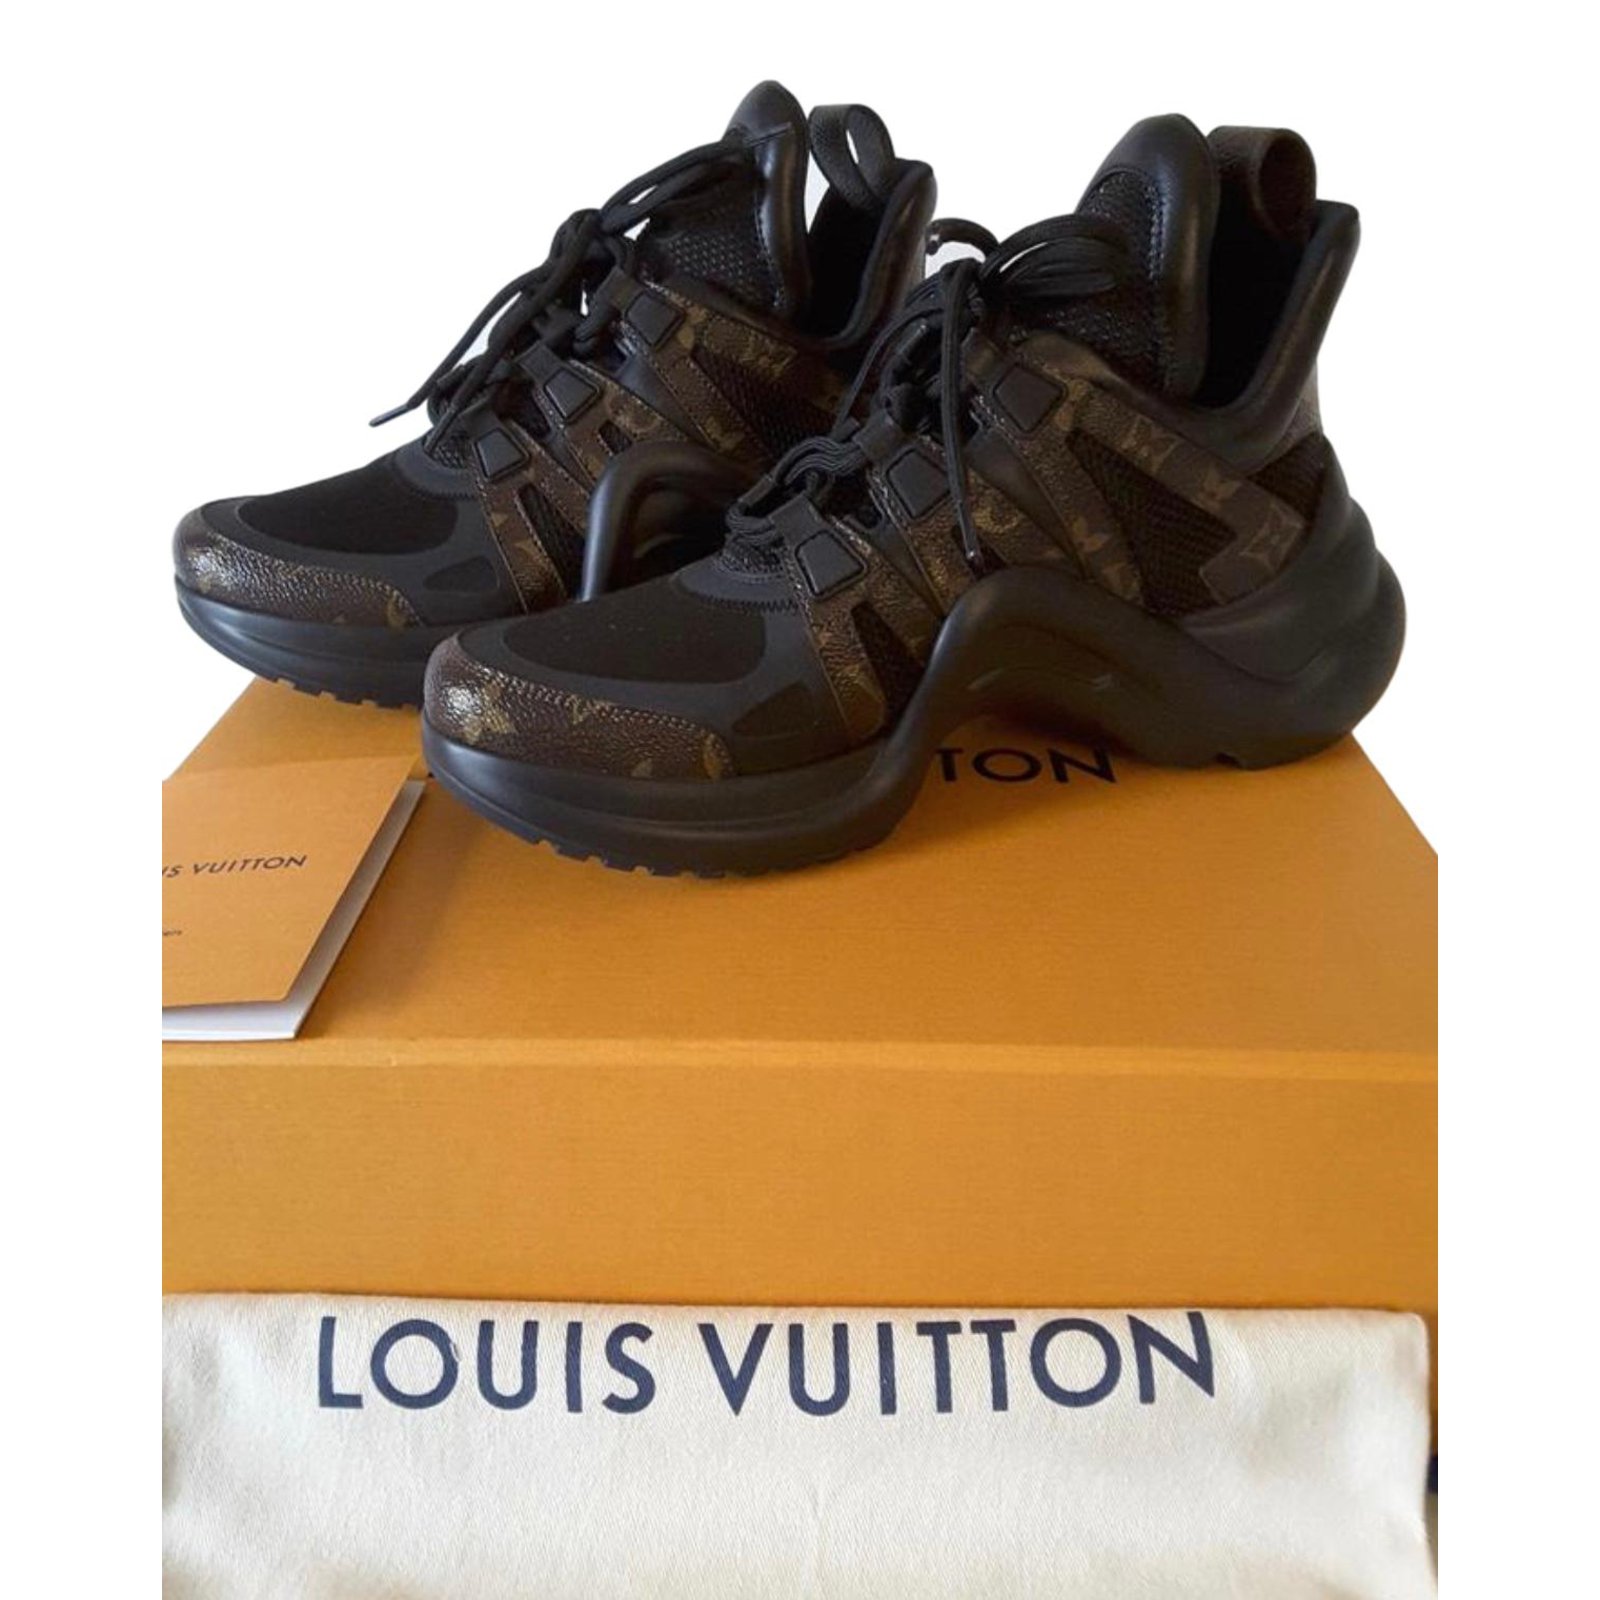 Louis Vuitton ARCHLIGHT monogram 